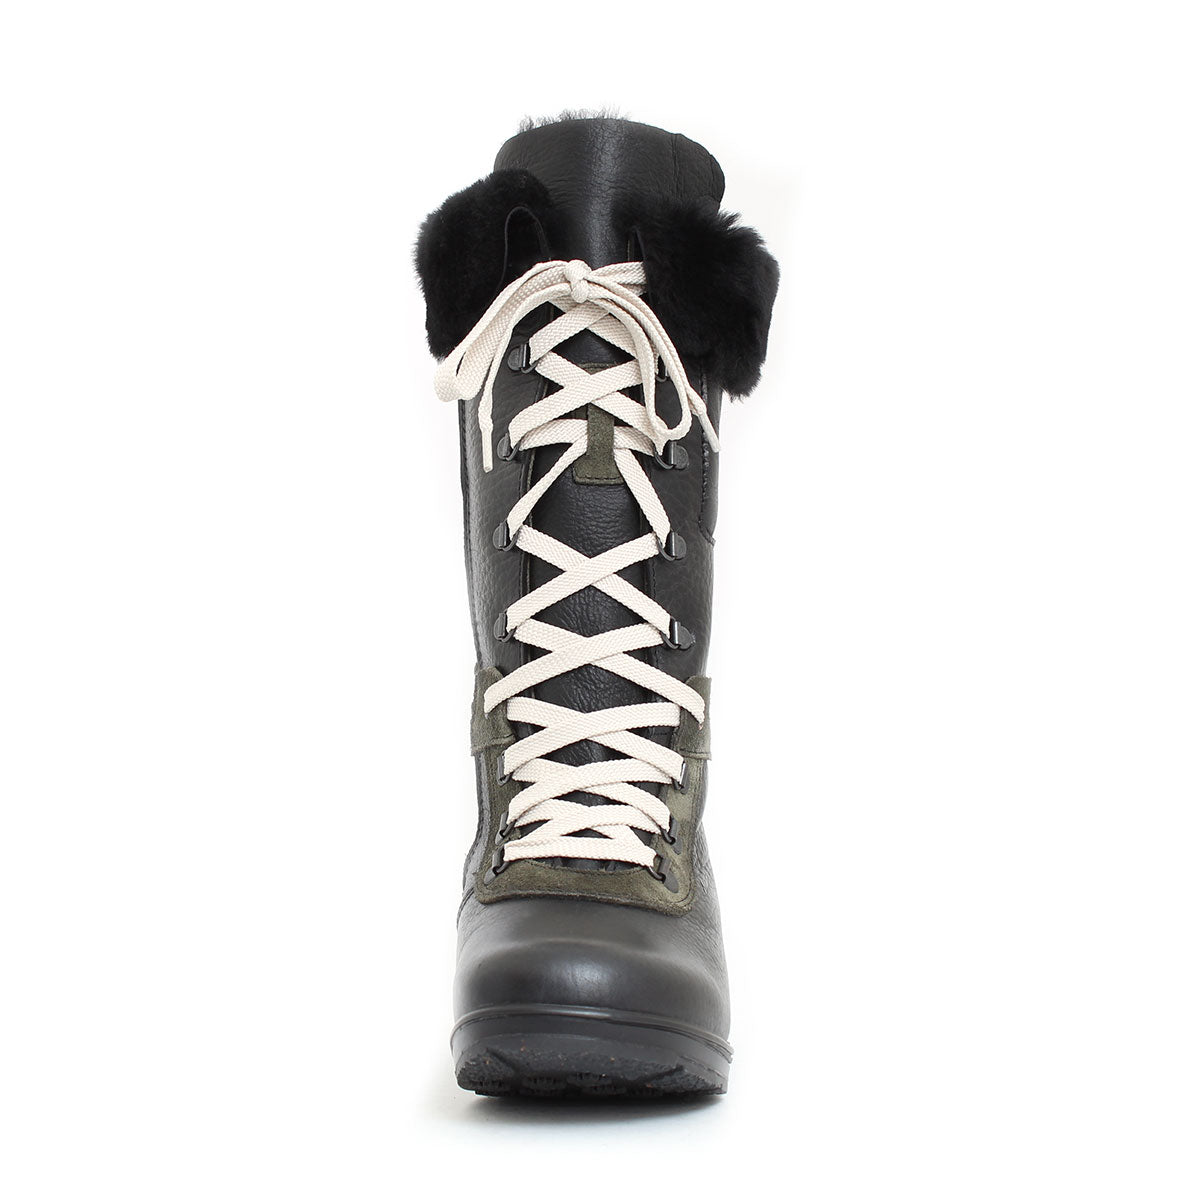 Maggie winter boot for women - Tan-Grey